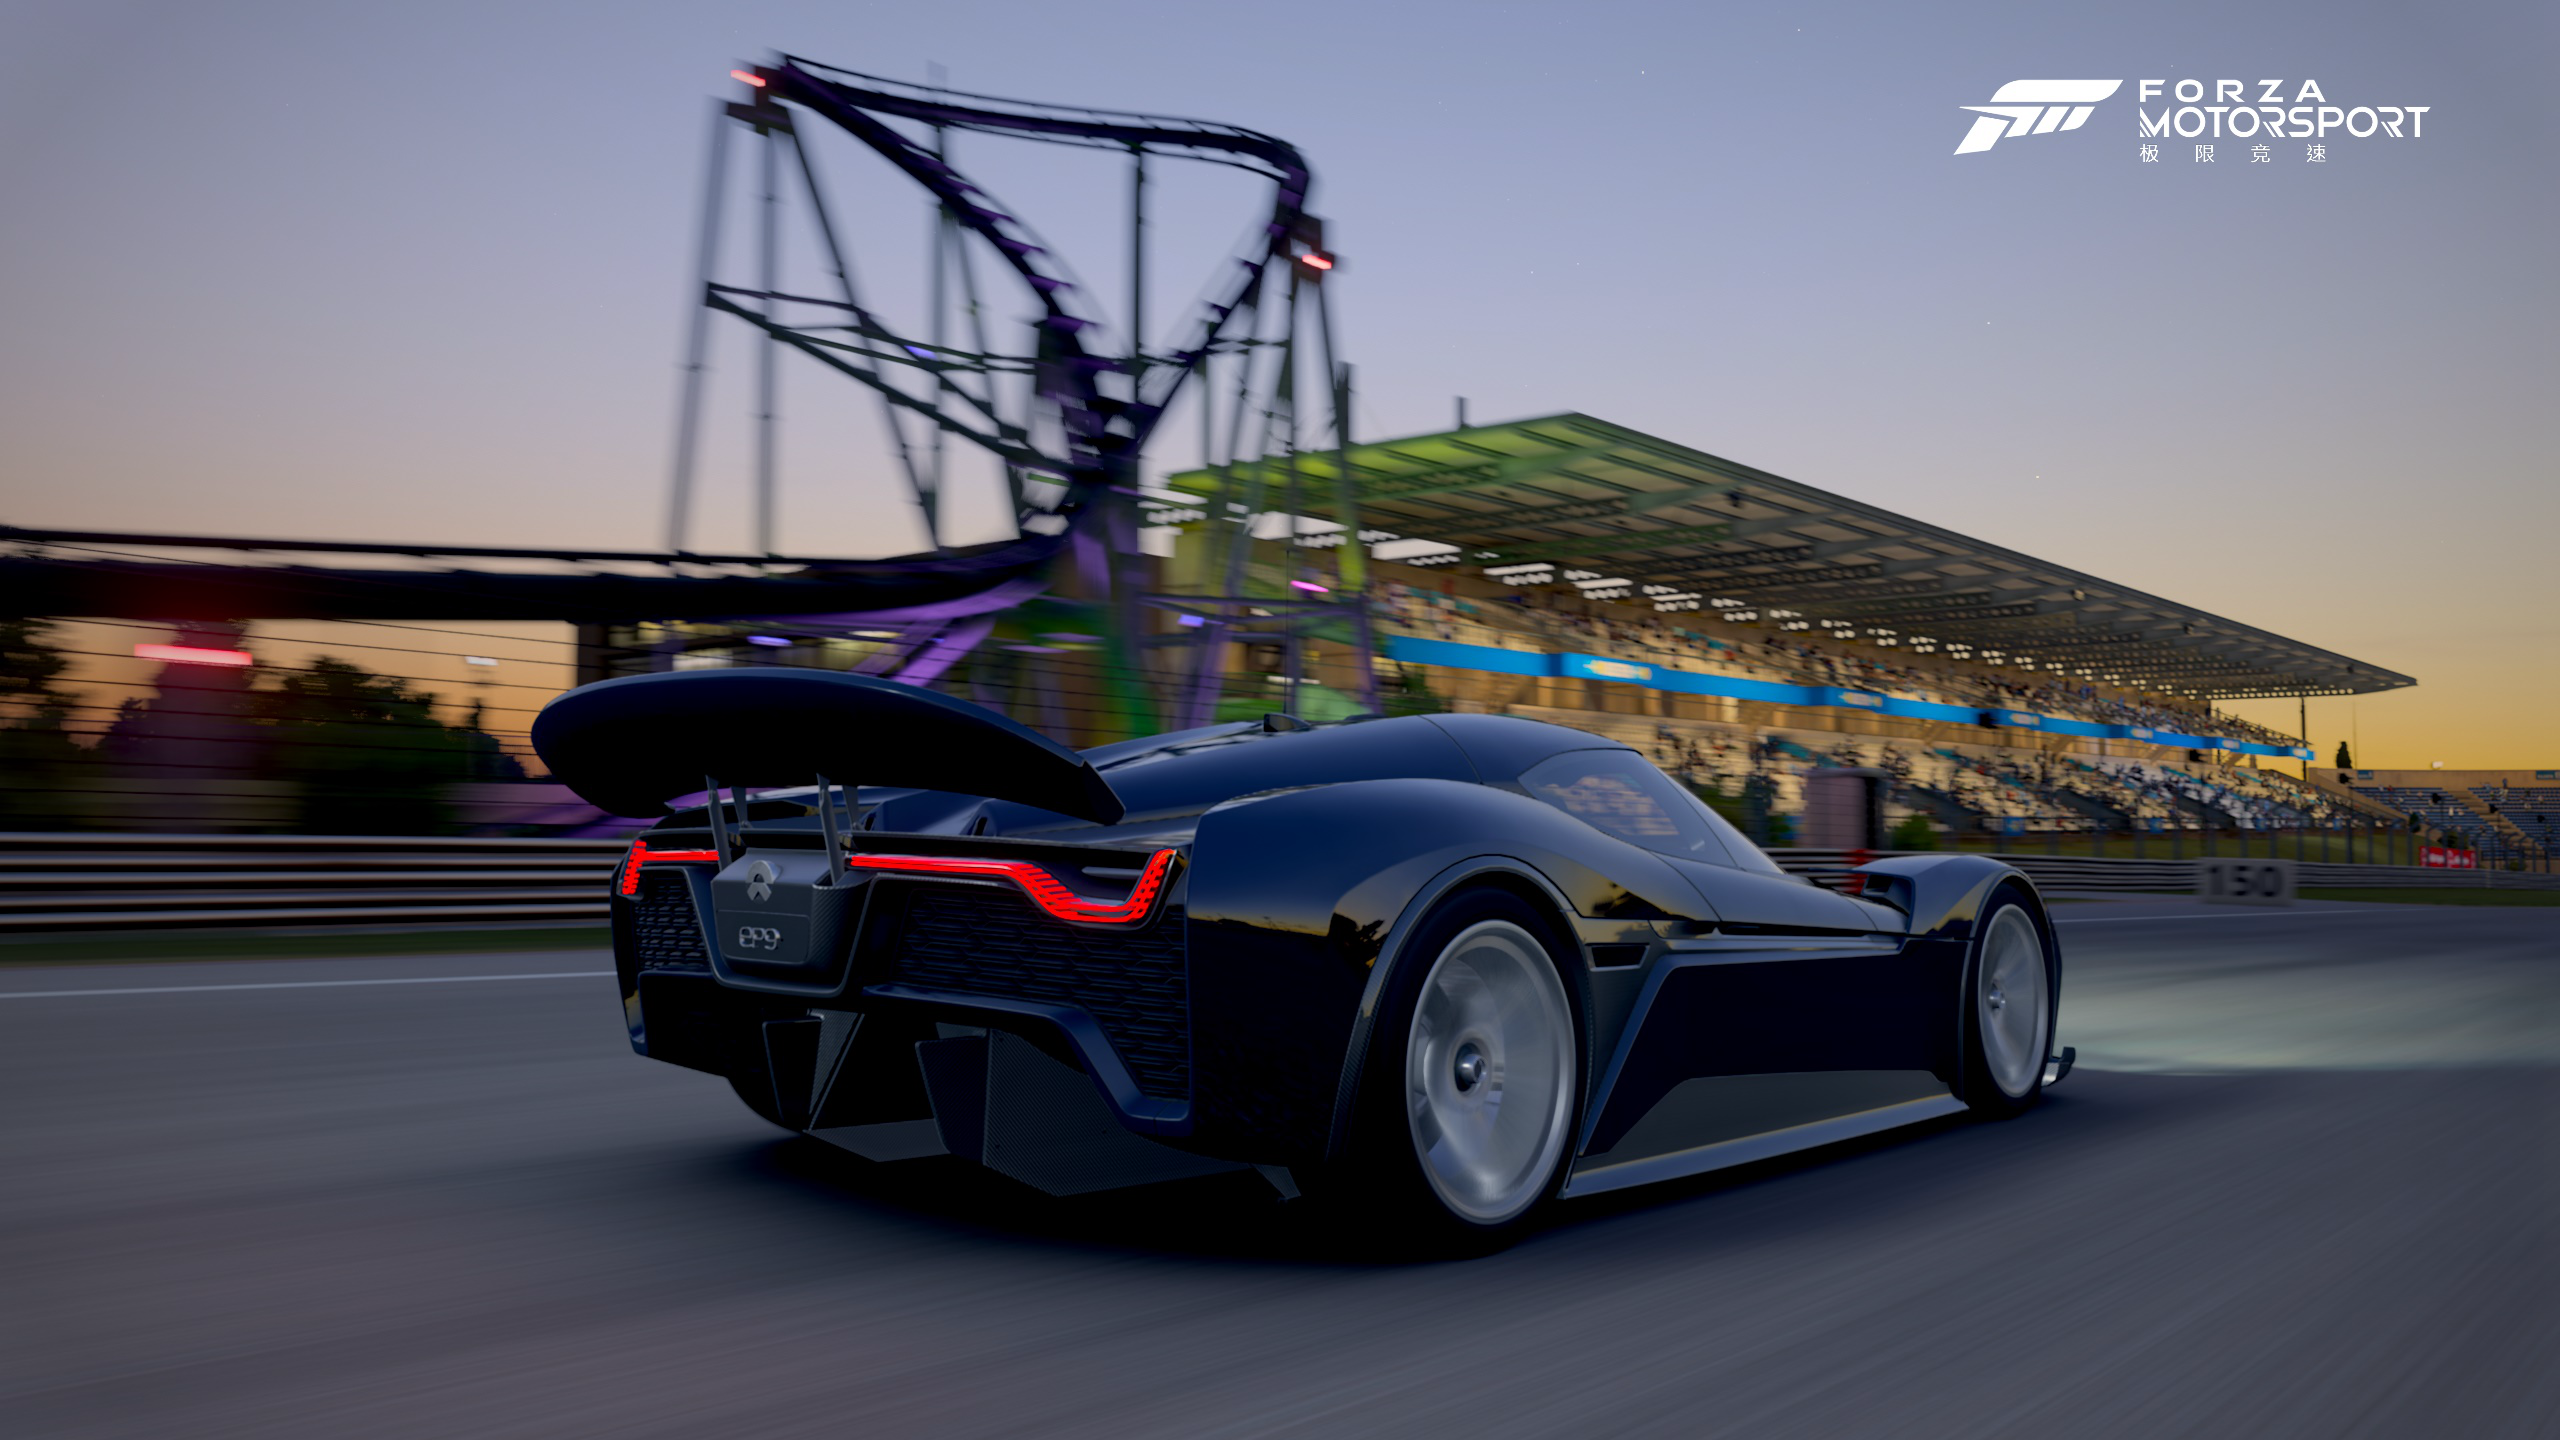 給 Forza Motorsport 新手玩家的兩個小Tips